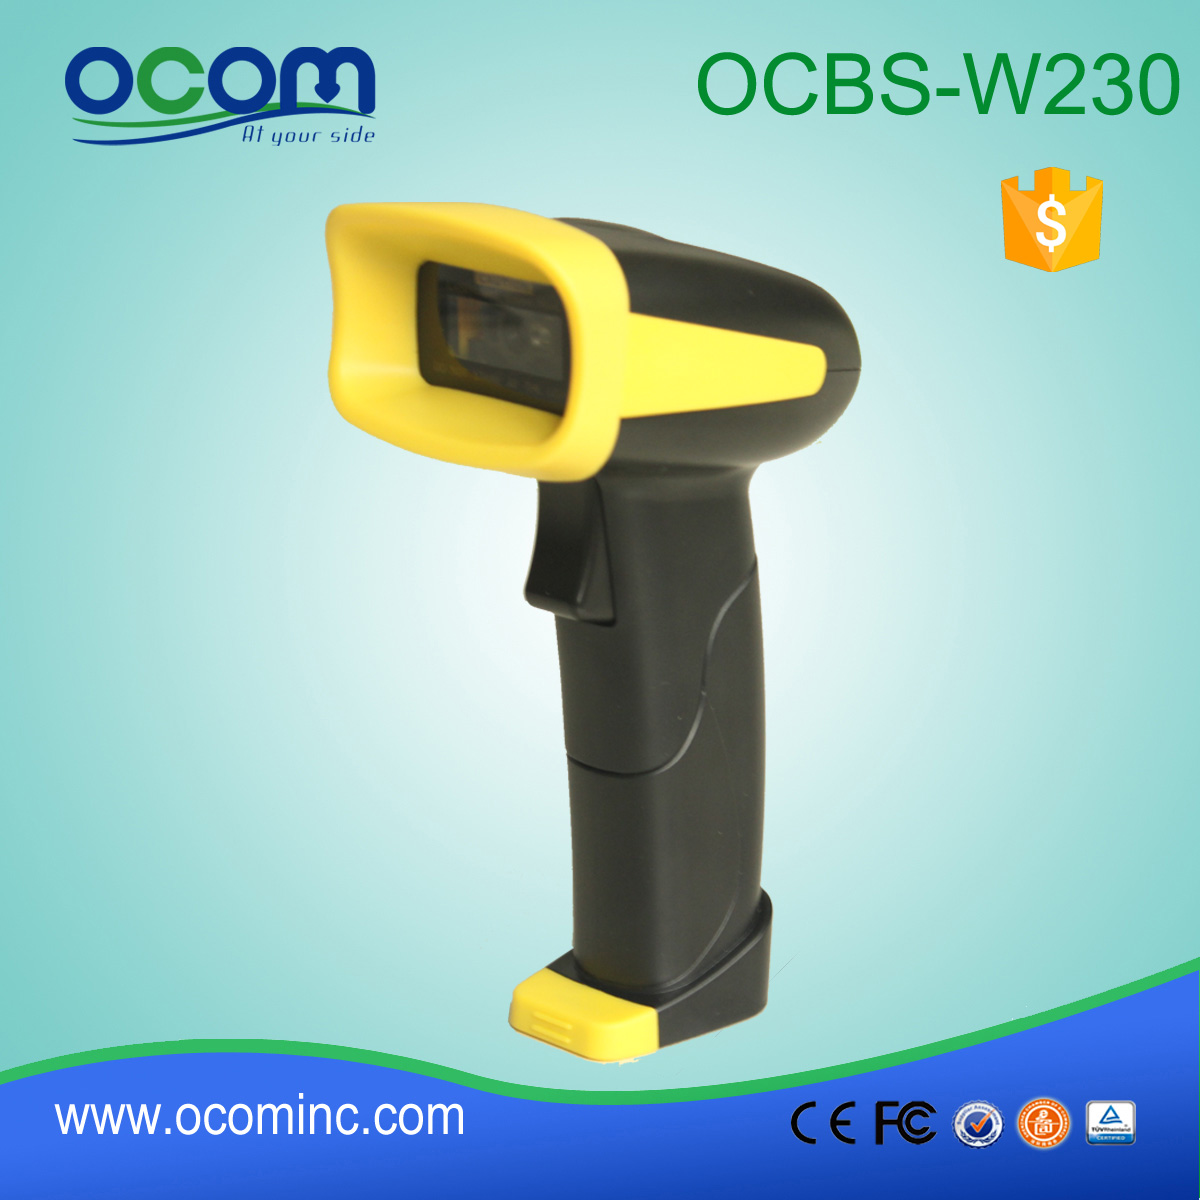 OCBS-W230: Bluetooth de codes à barres 2D portable sans fil haut débit